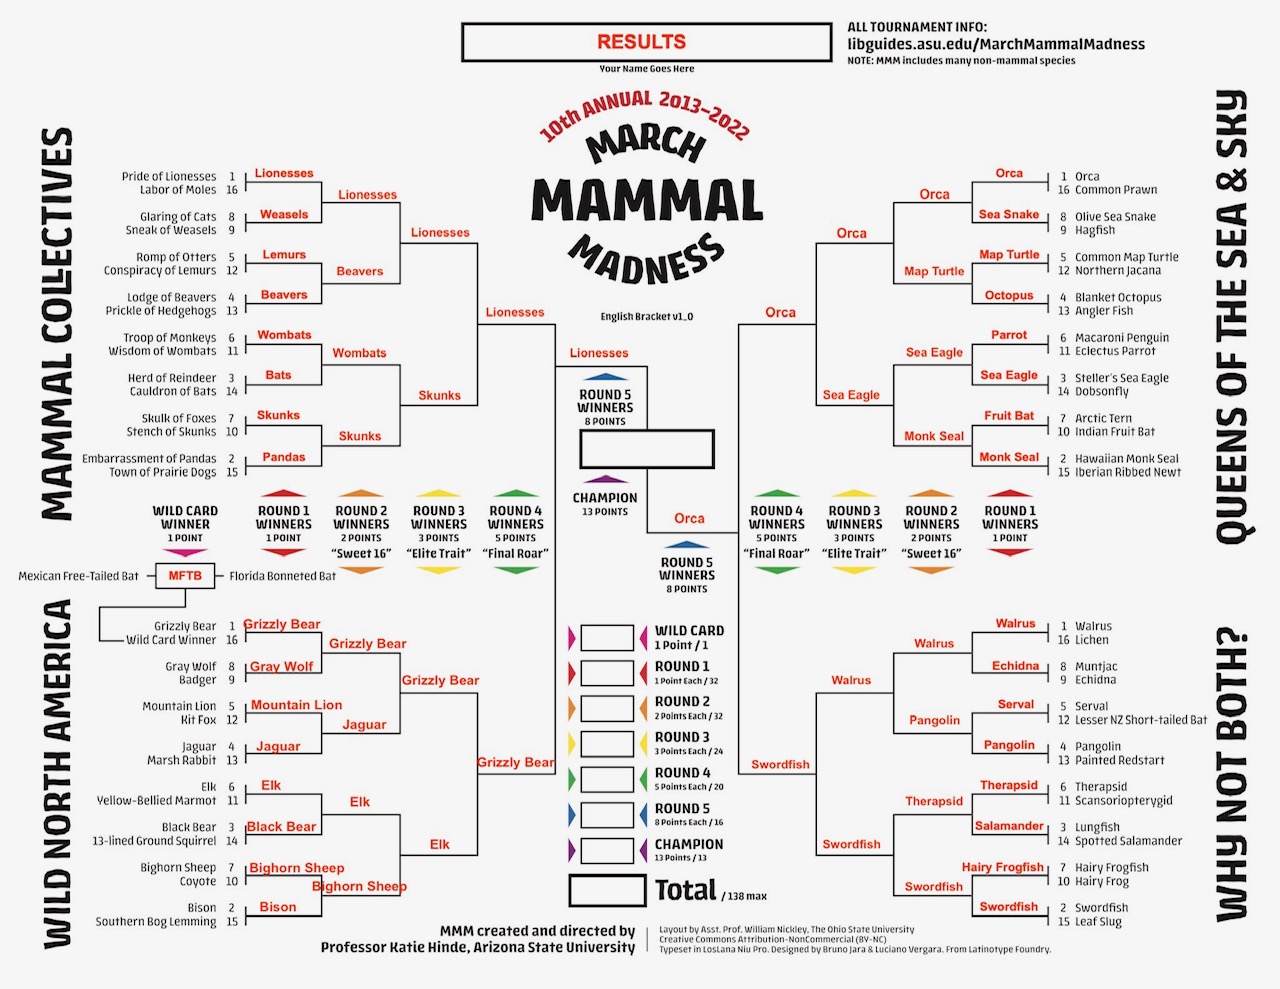 2022 March Mammal Madness Bracket Challenge results are in!! Fonda